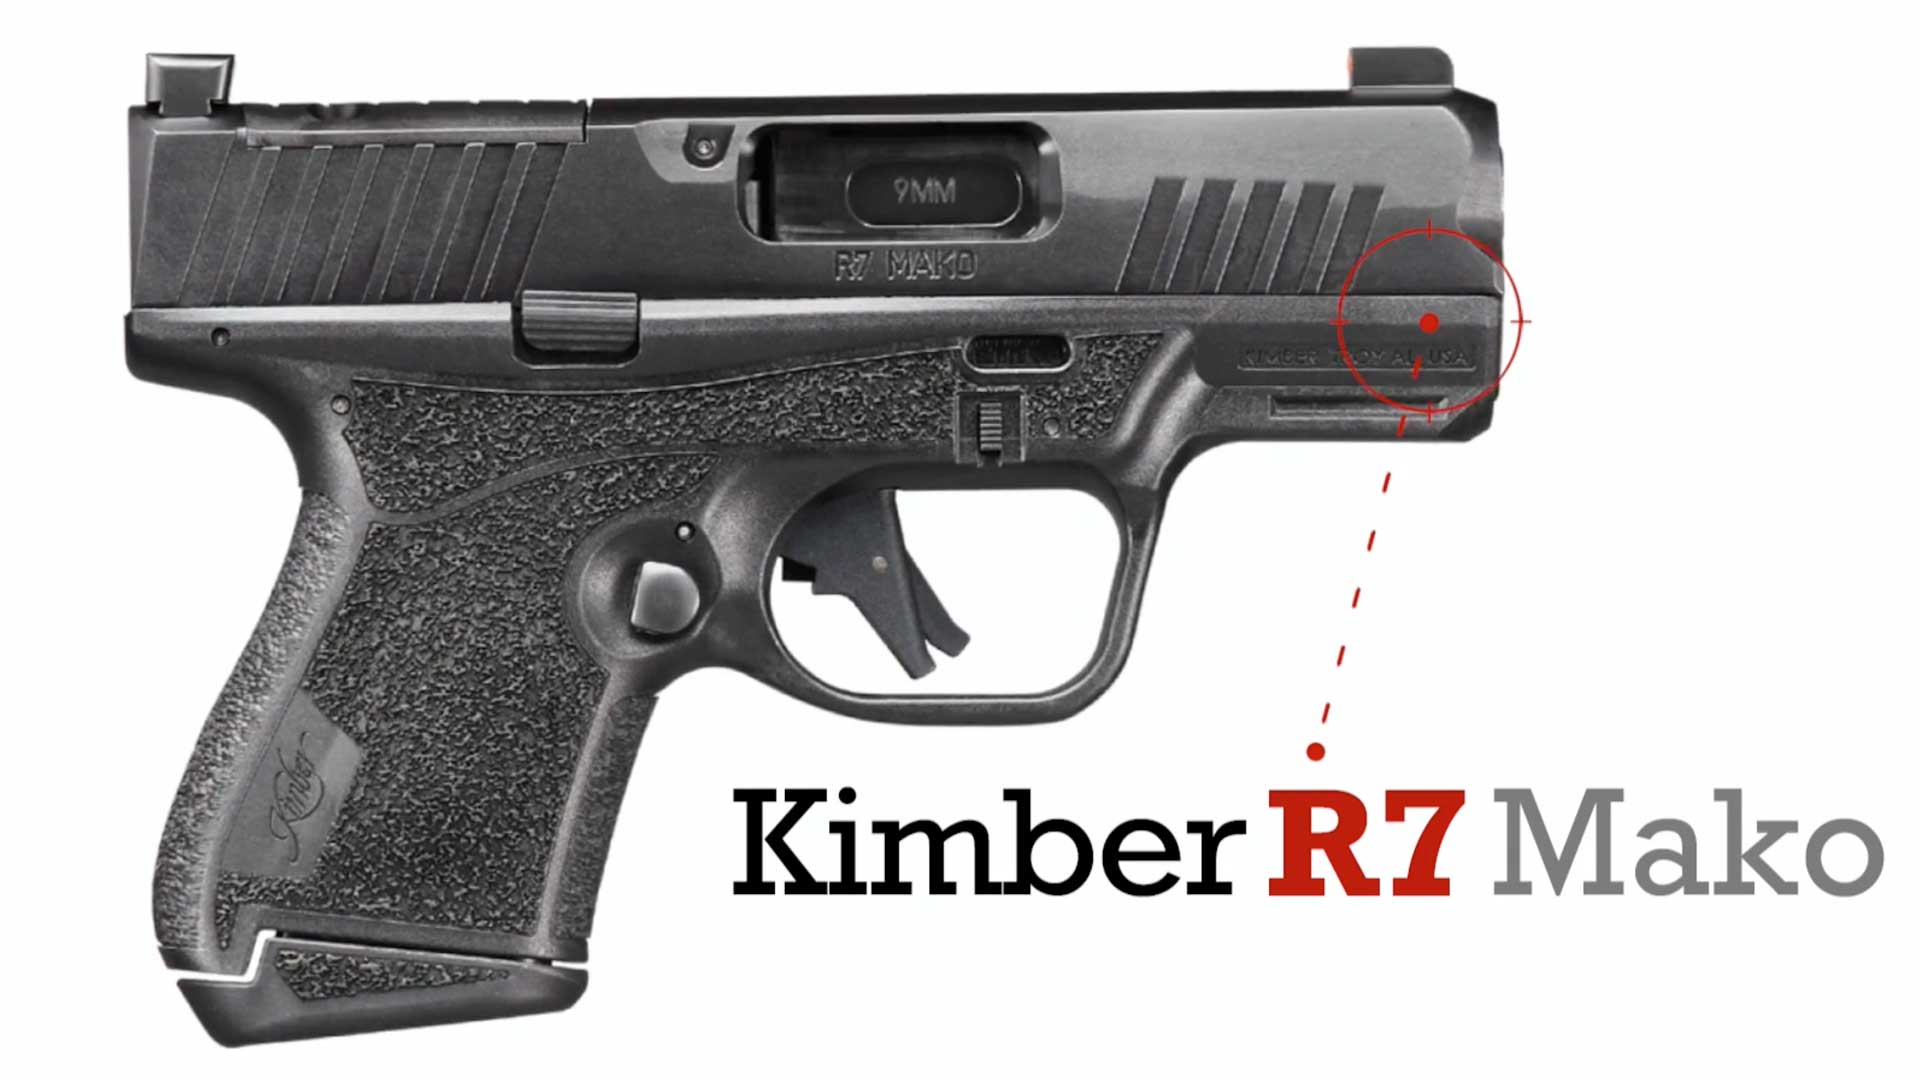 right side pistol handgun black plastic steel gun text on image noting "Kimber R7 Mako"